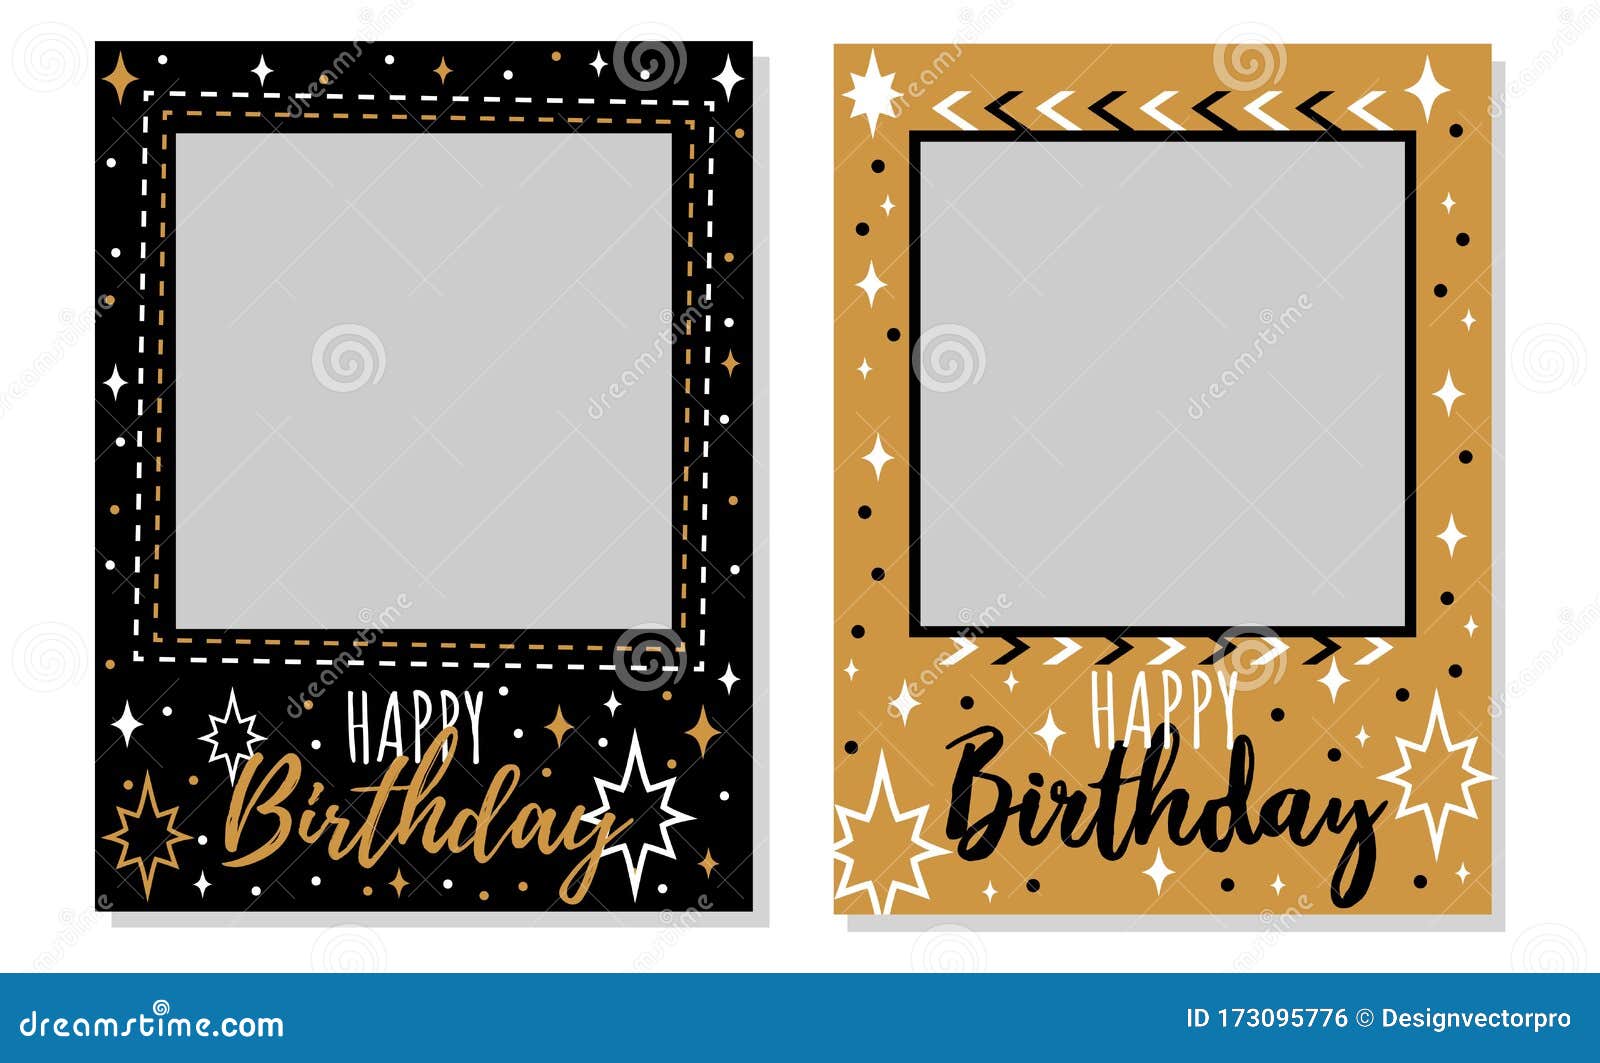 Happy Birthday Black and Gold Photo Frames Set Stock Vector ...